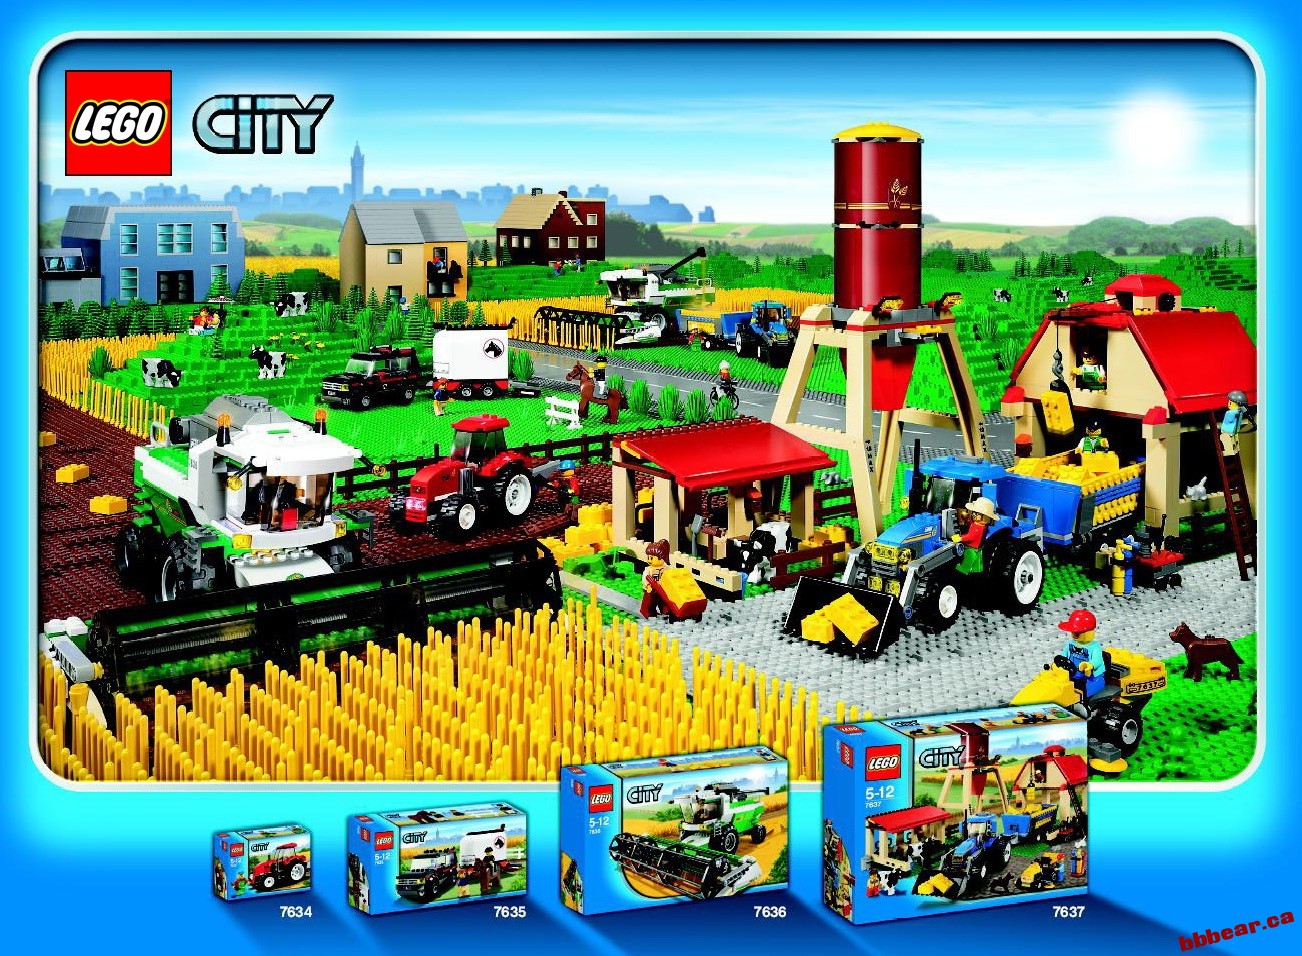 Lego_City_farm_sets_2009.jpg